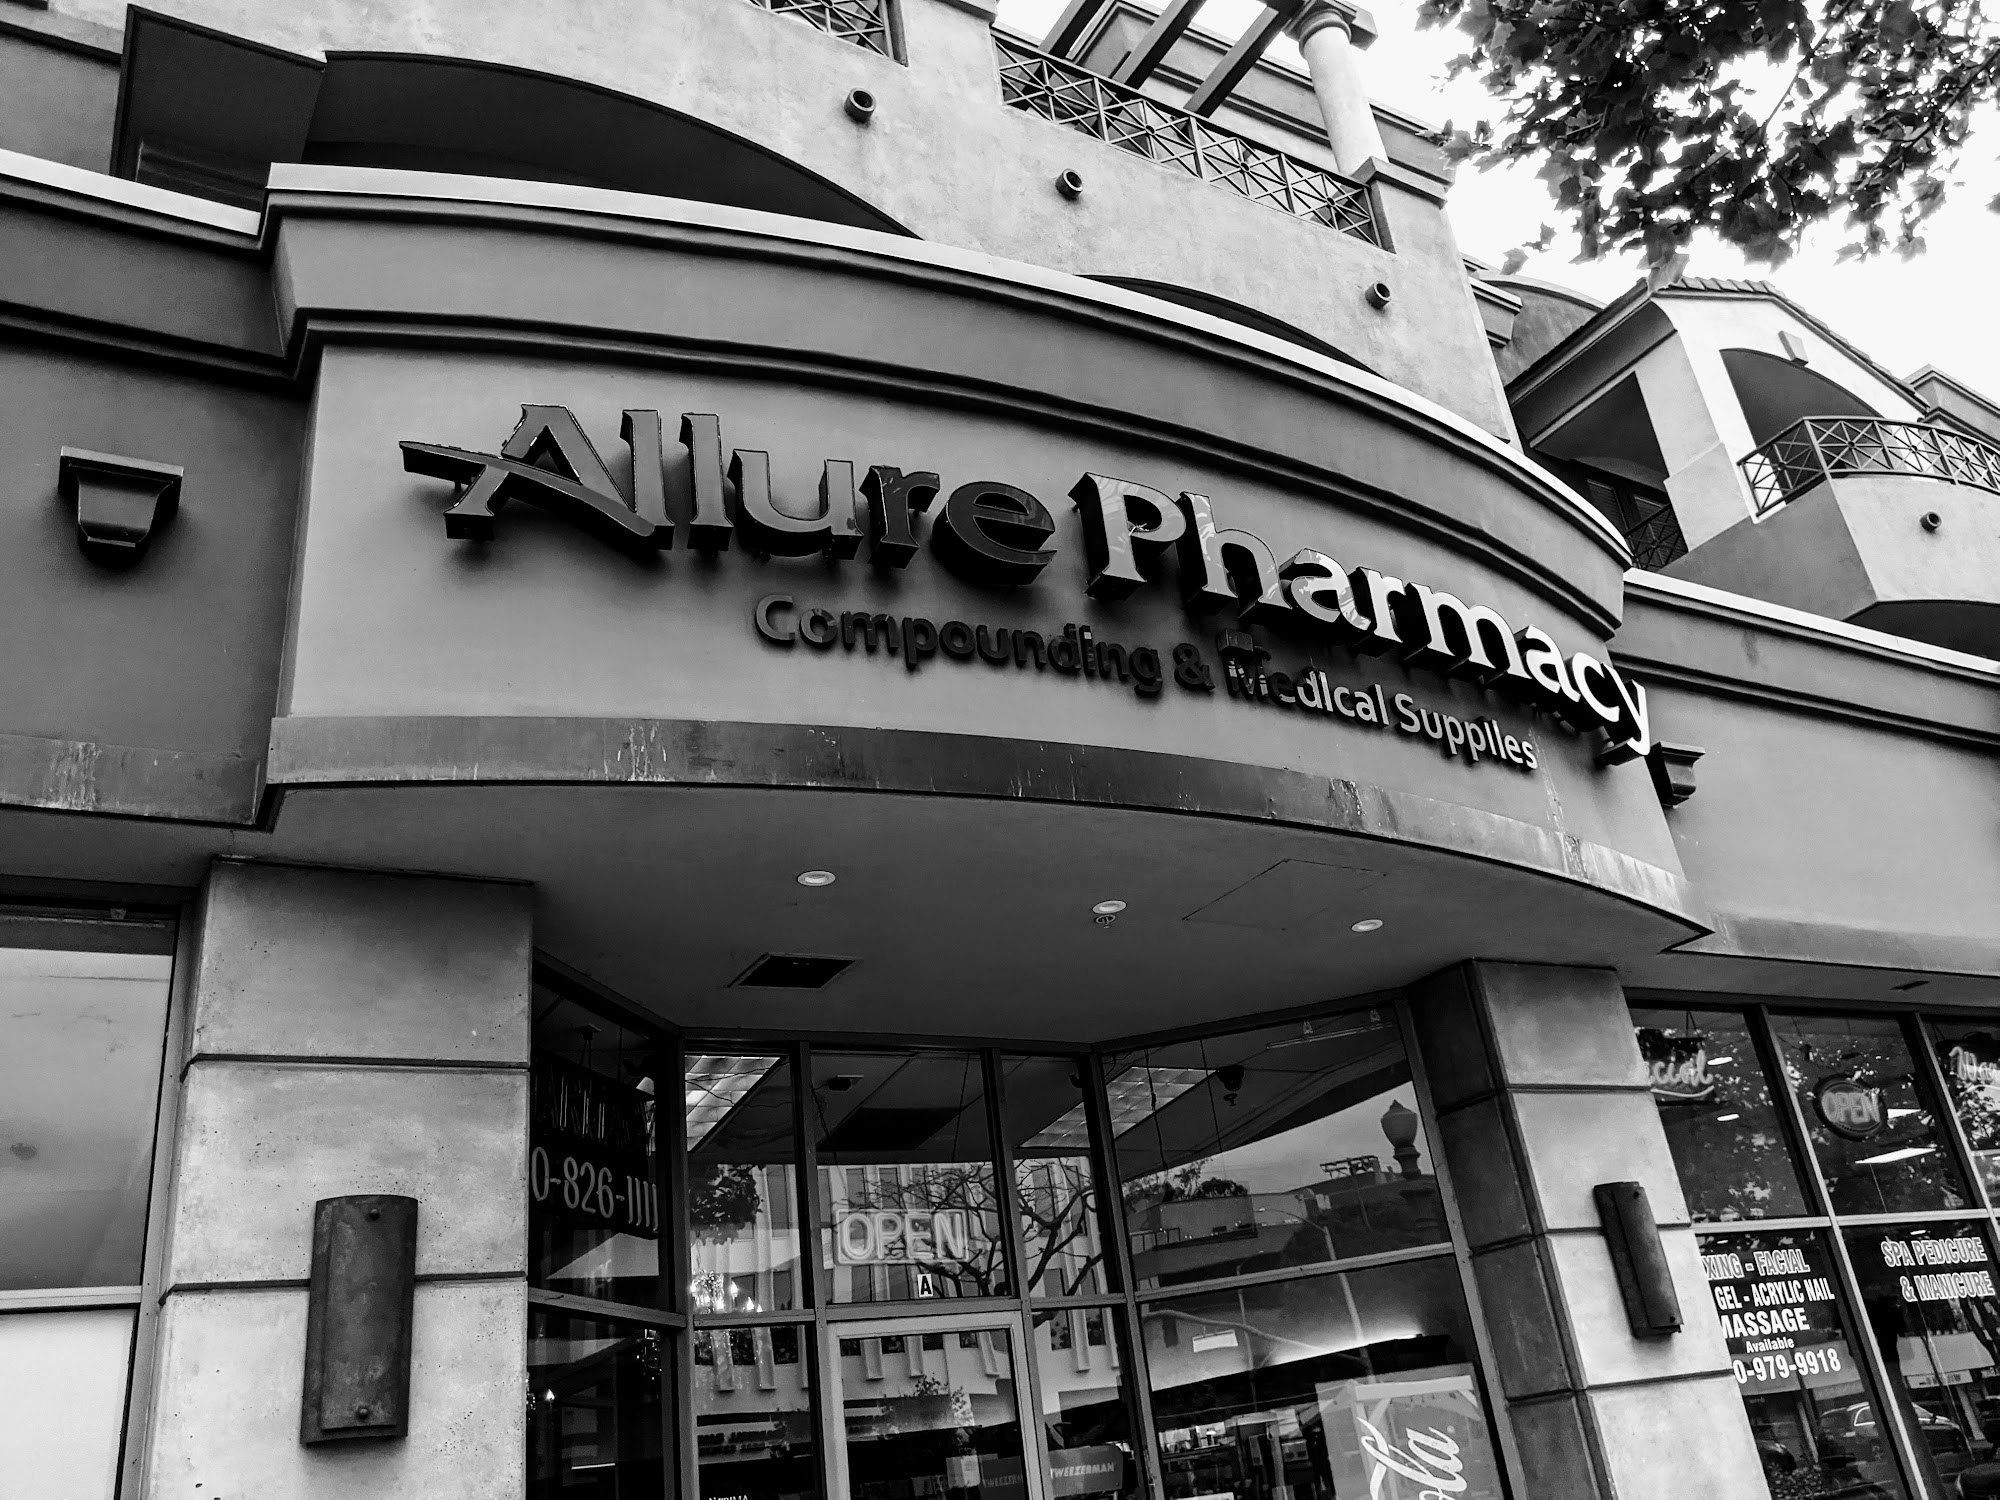 Allure Pharmacy & Compounding